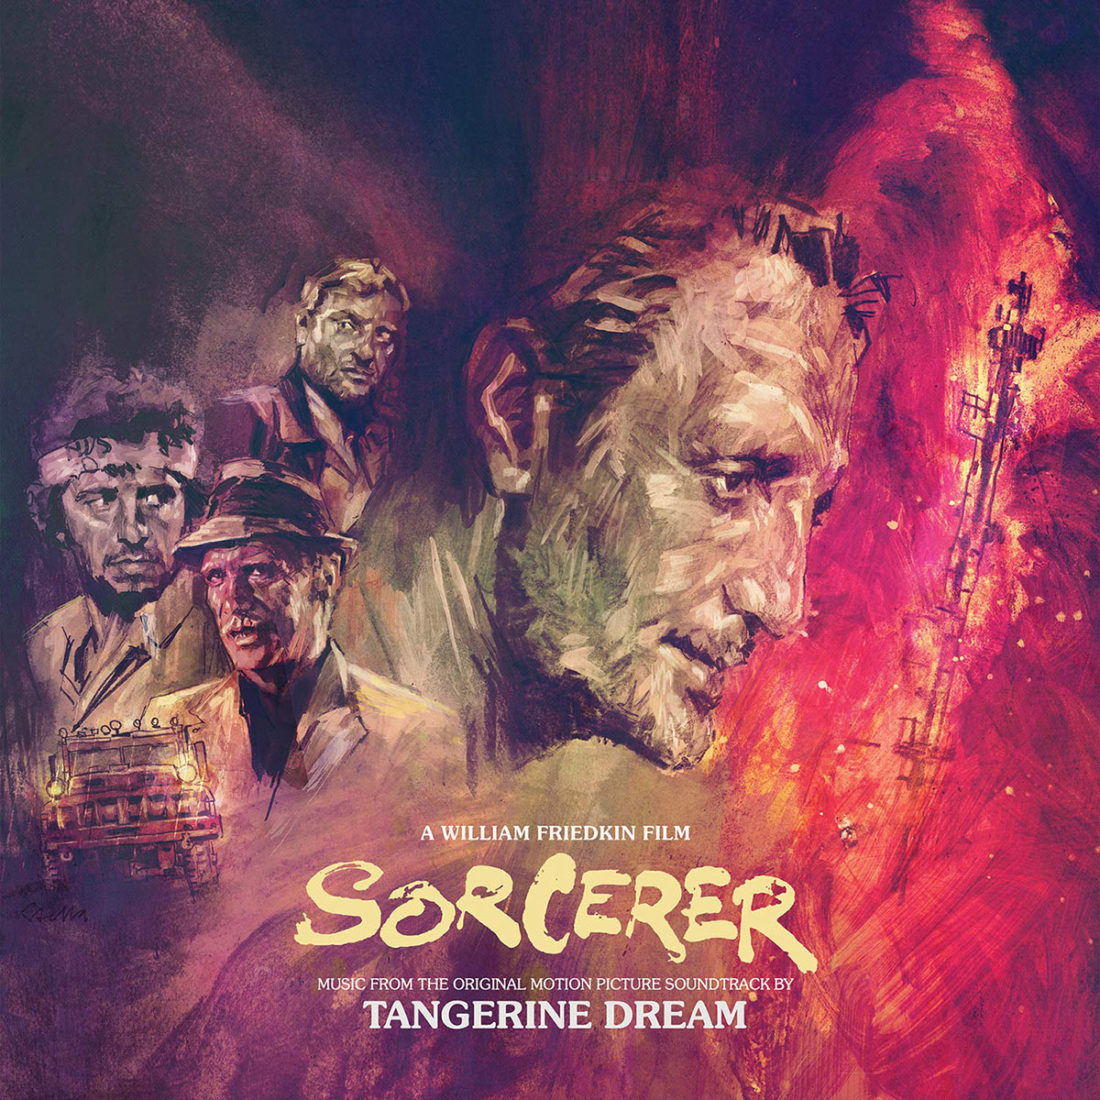 Sorcerer Original Motion Picture Soundtrack by Tangerine Dream (1977)